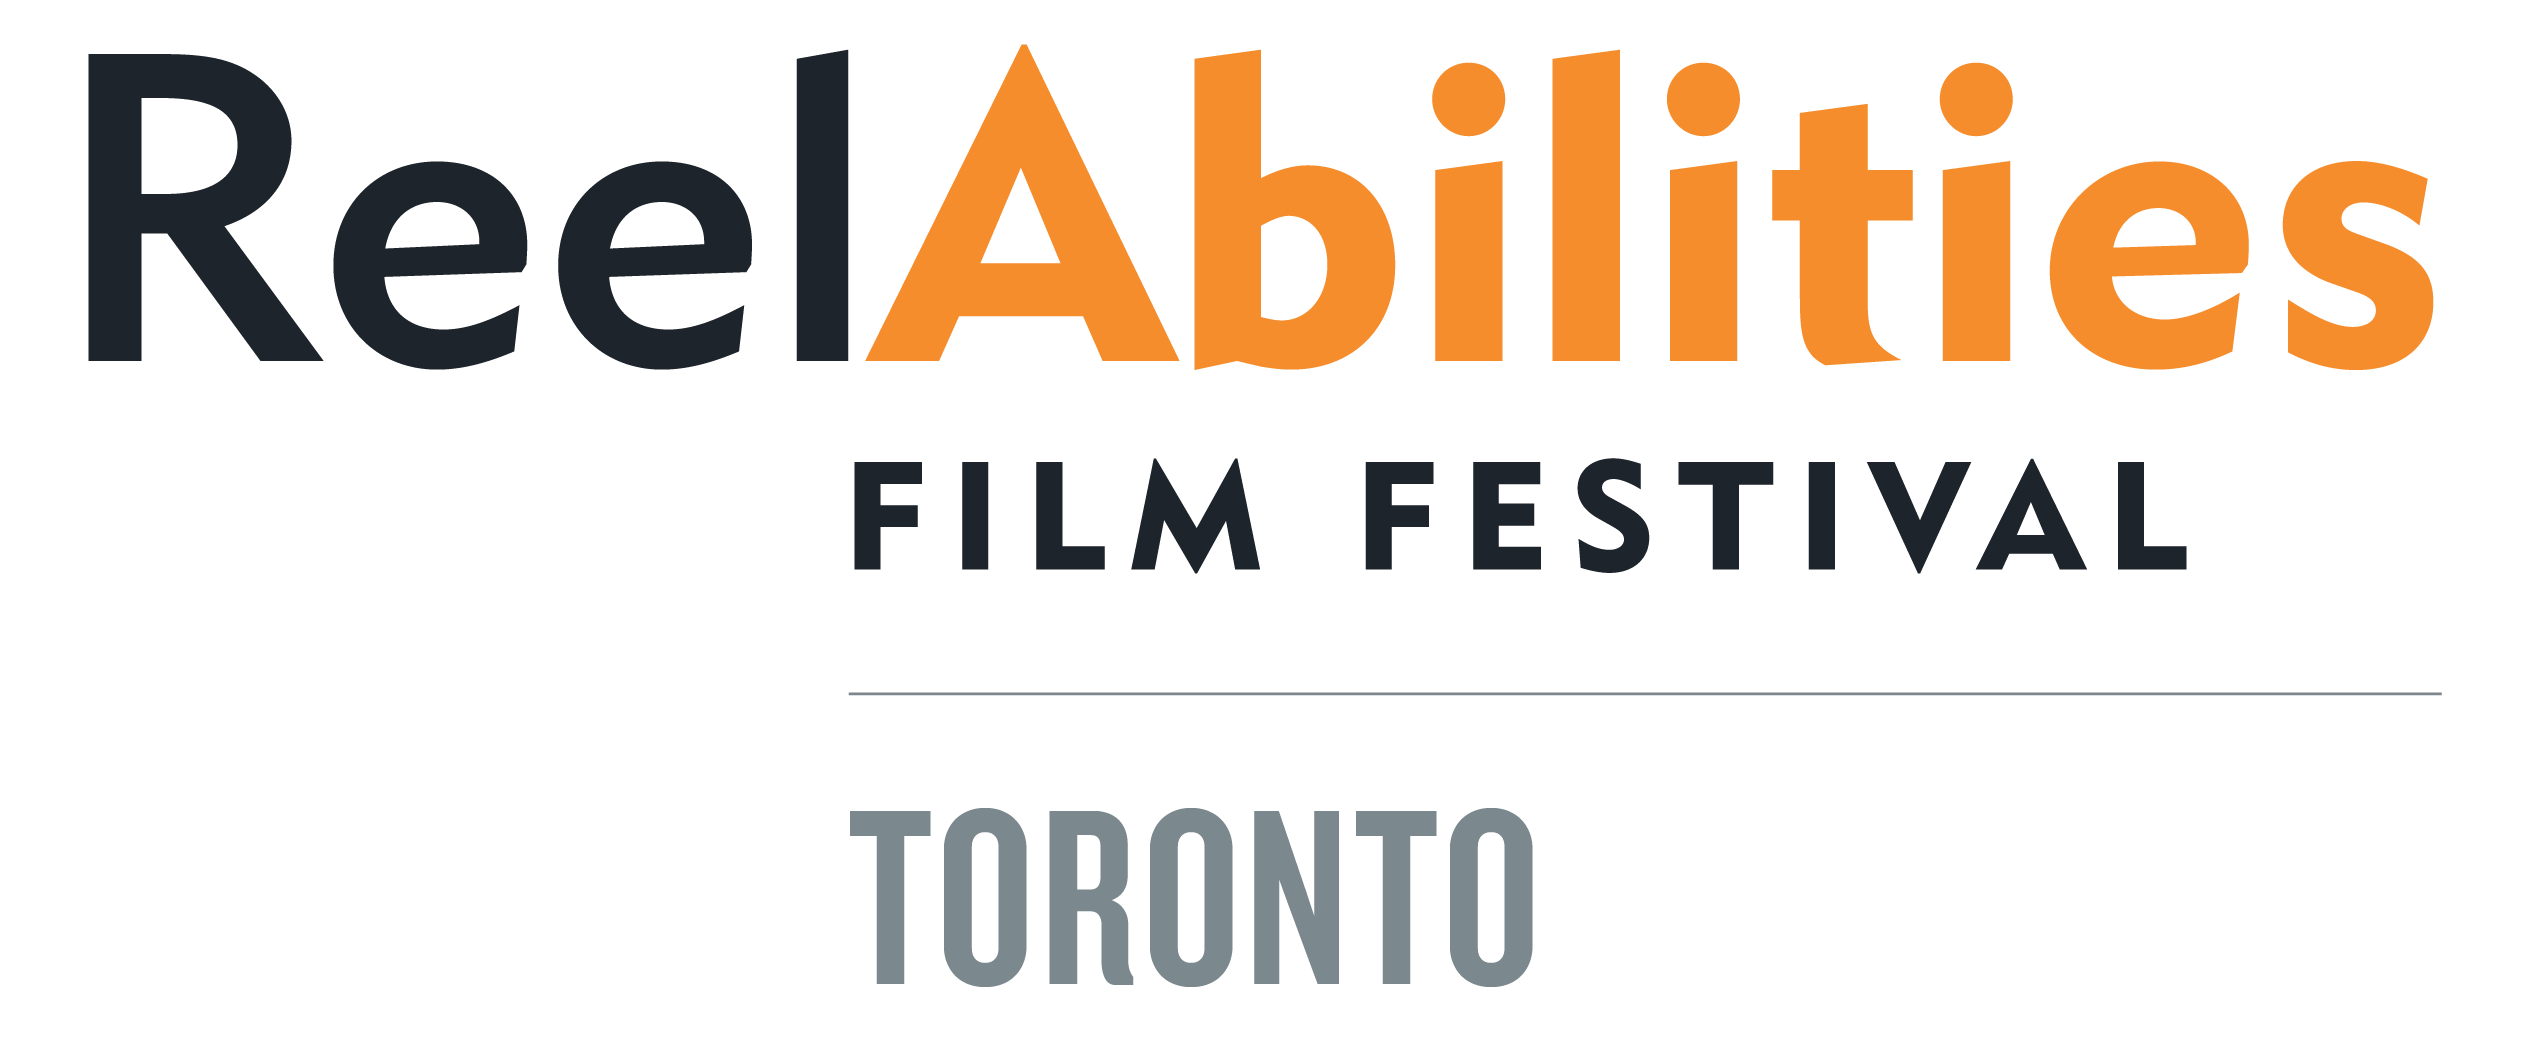 ReelAbilities Film Festival Toronto